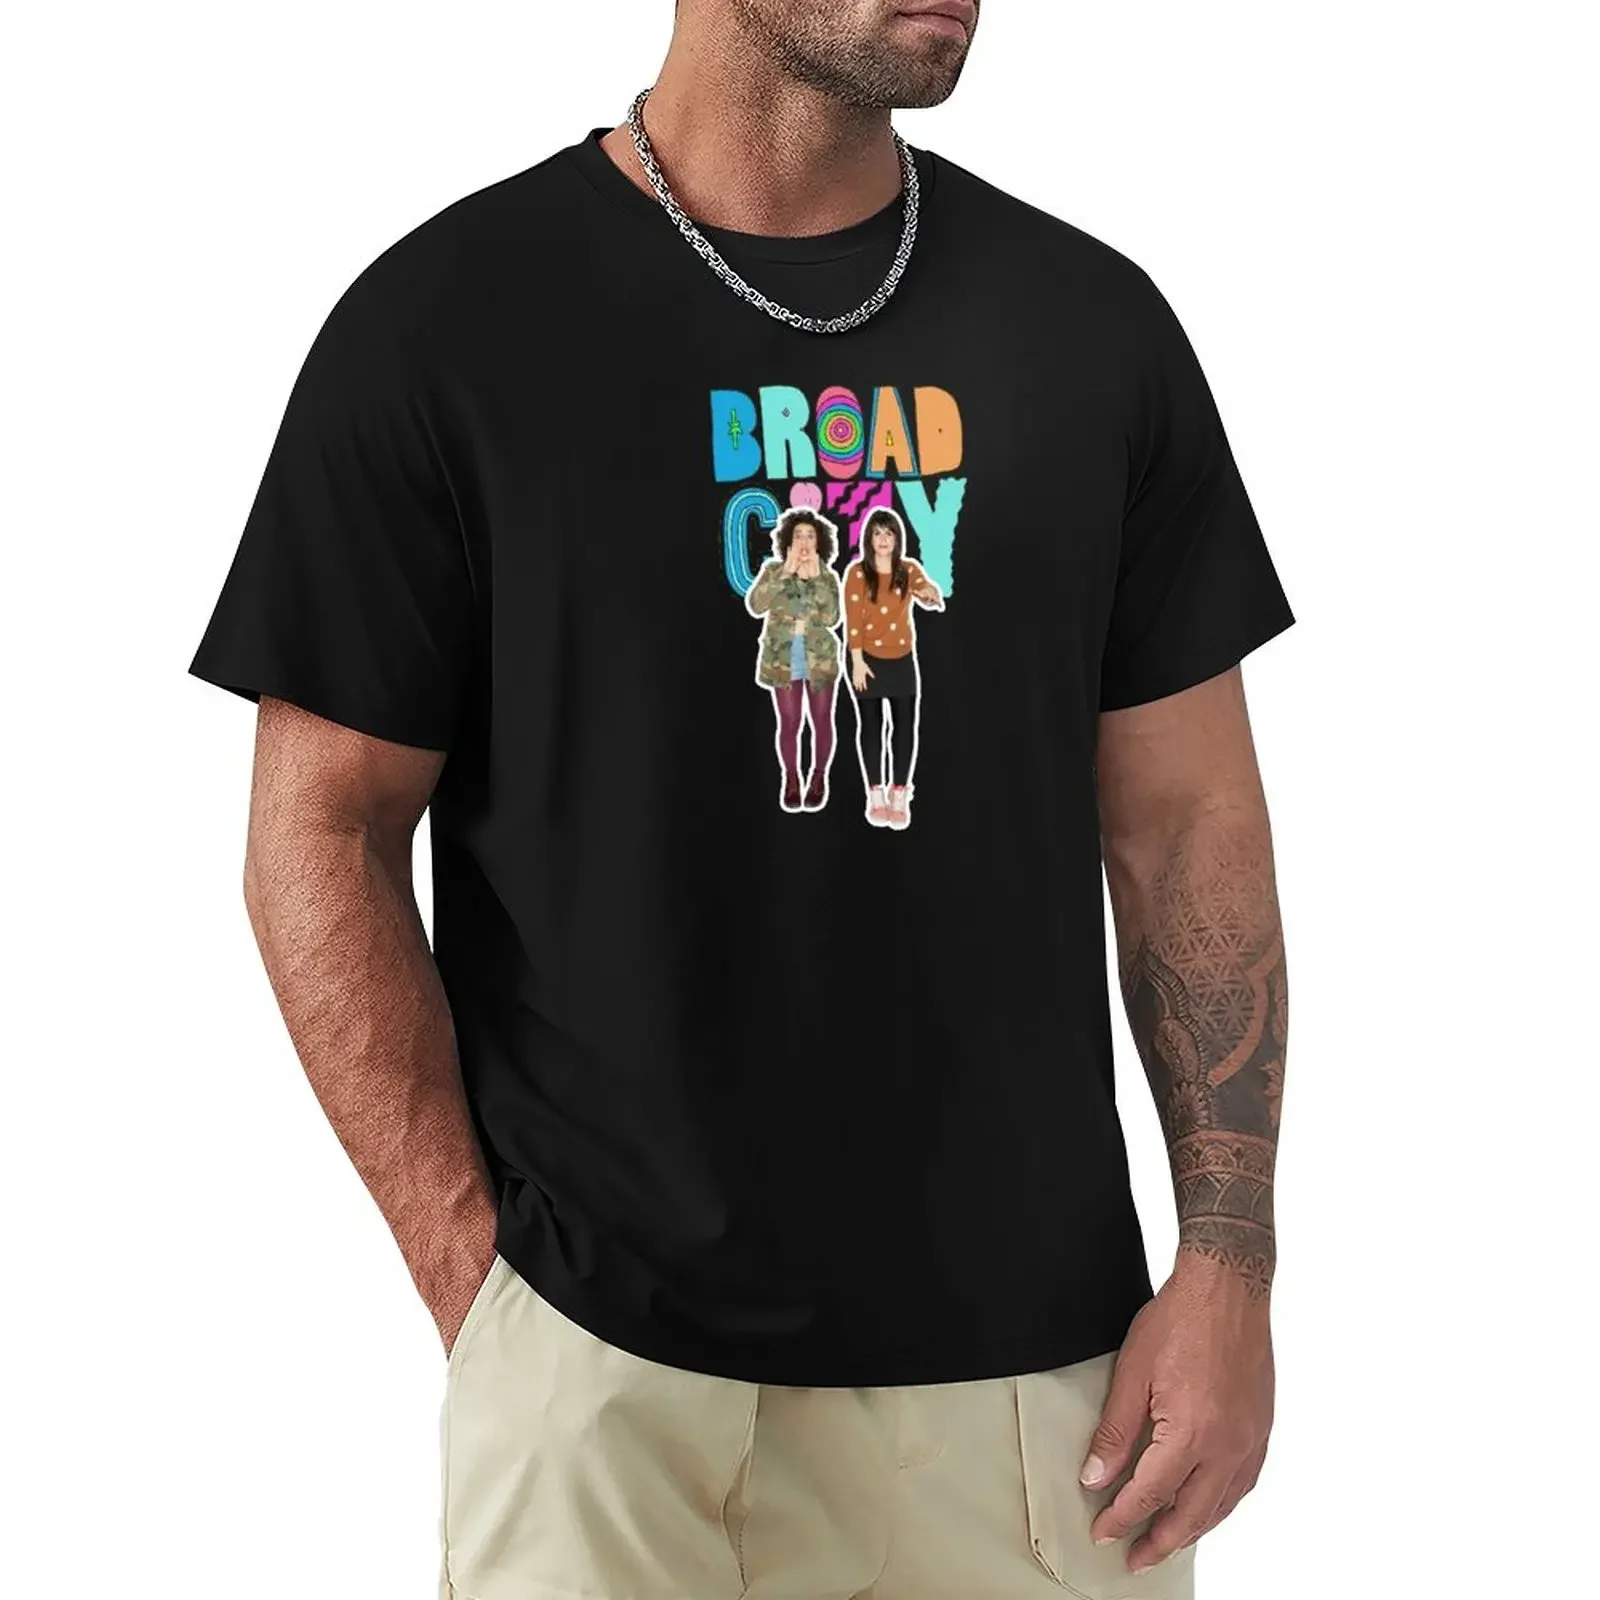 

Brd ciry T-Shirt sports fans boys animal print customs design your own t shirts for men pack